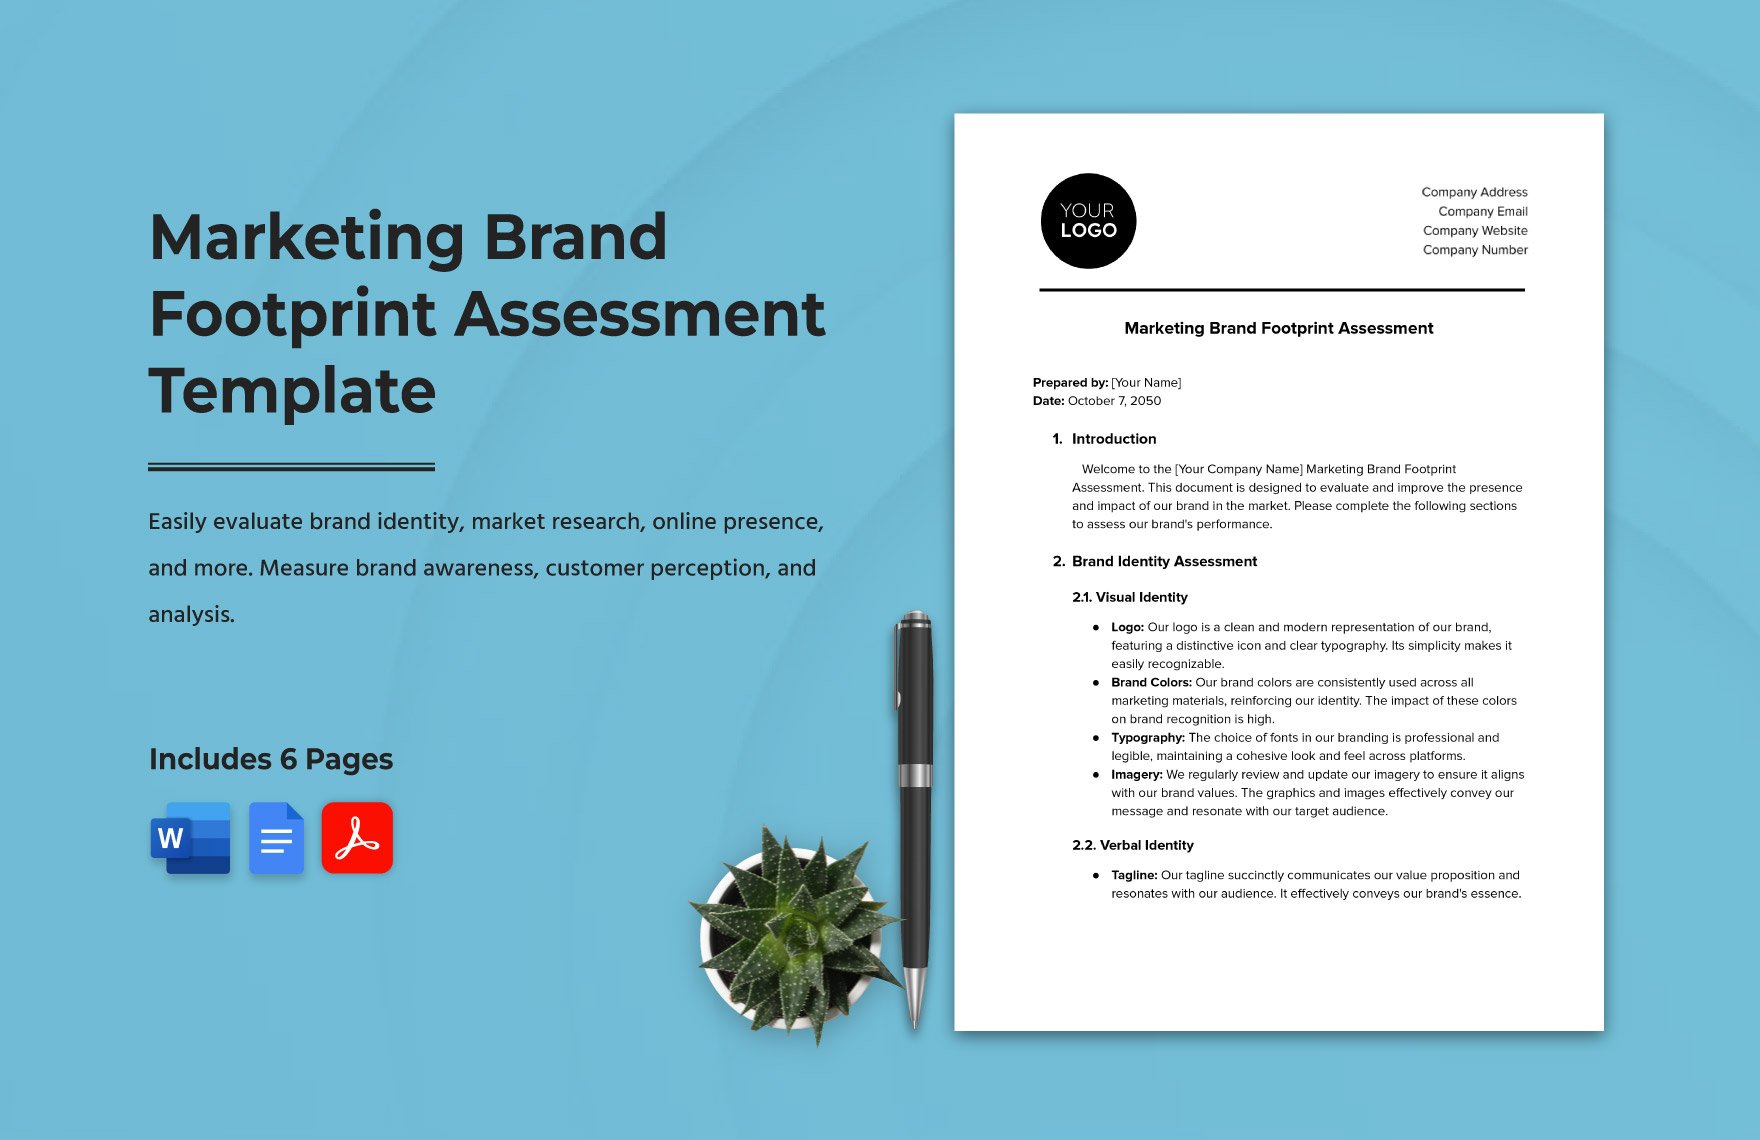 Marketing Brand Footprint Assessment Template in Word, Google Docs, PDF